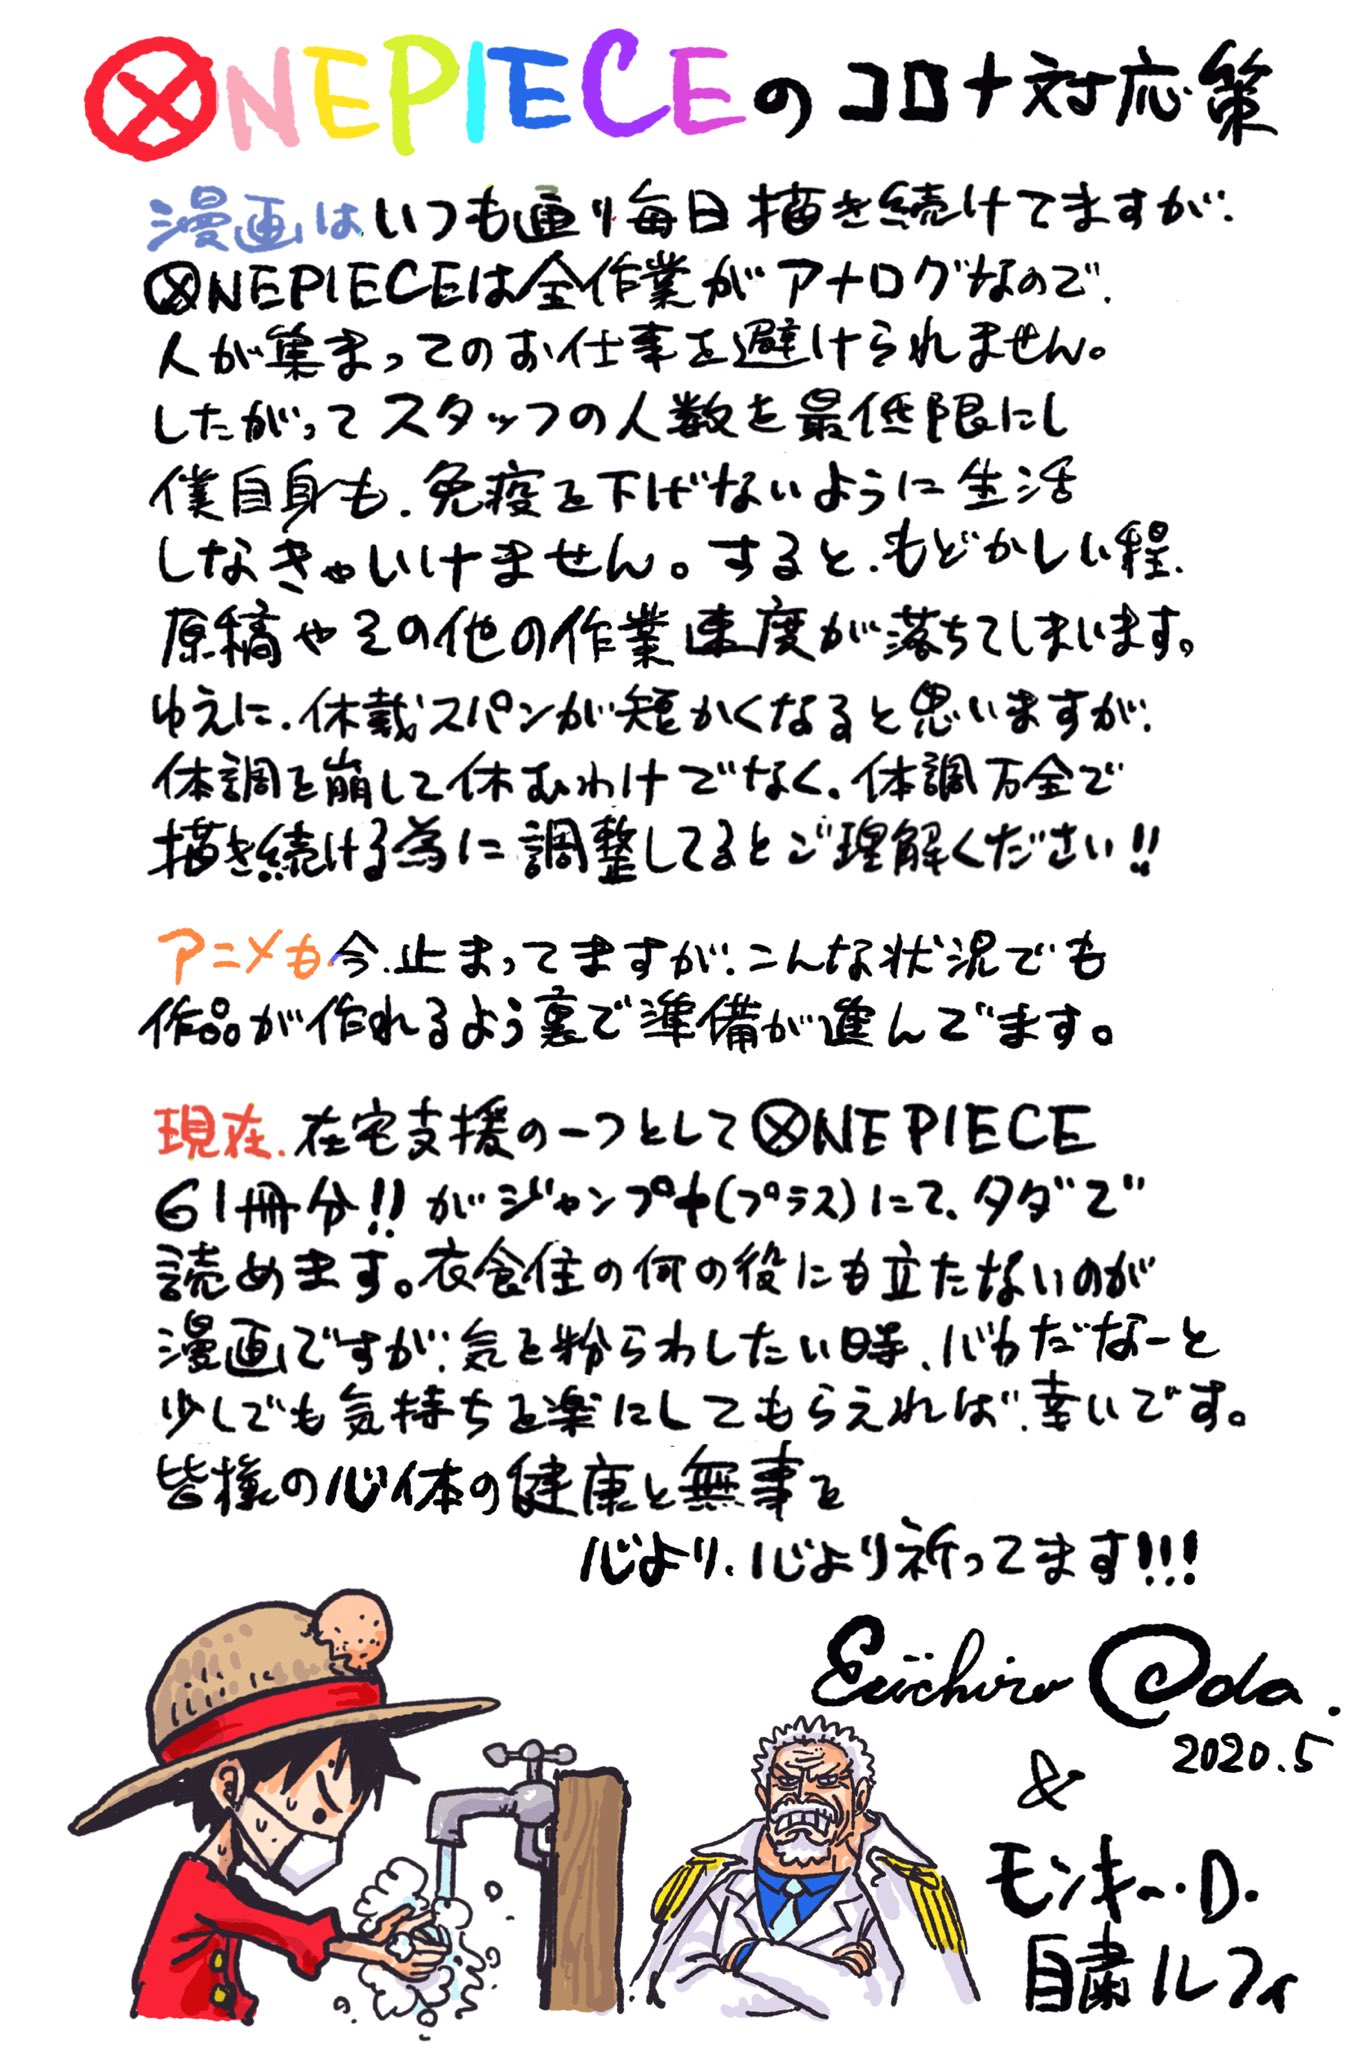 Eiichiro Oda COVID Message